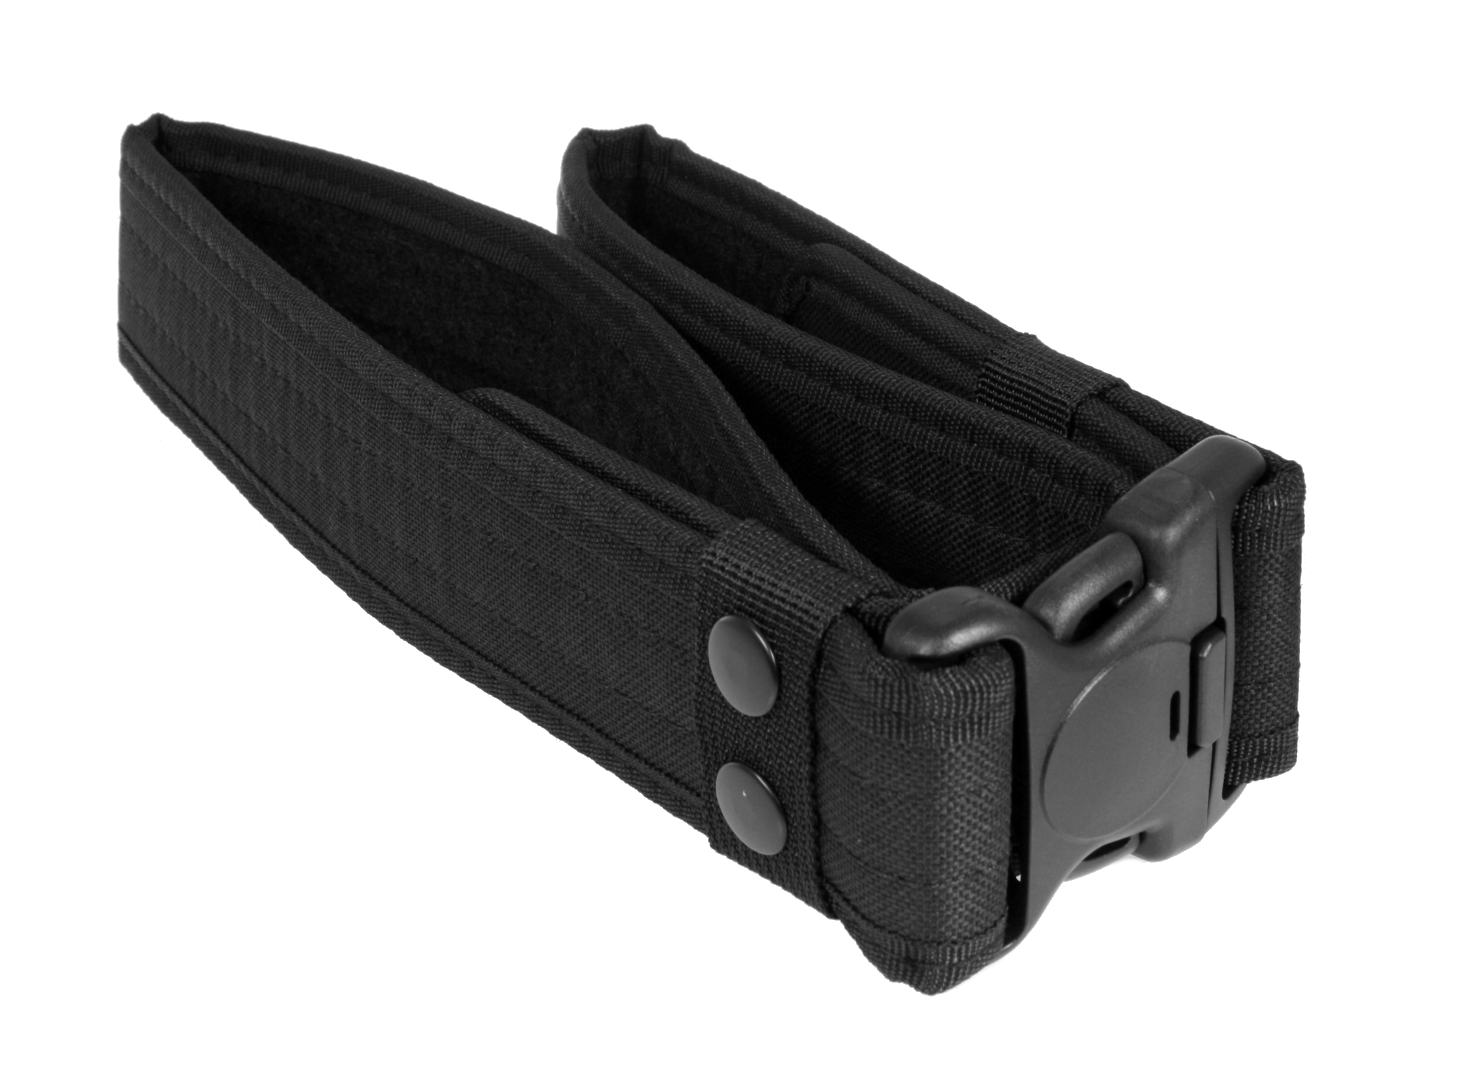 2" padded belt, folded